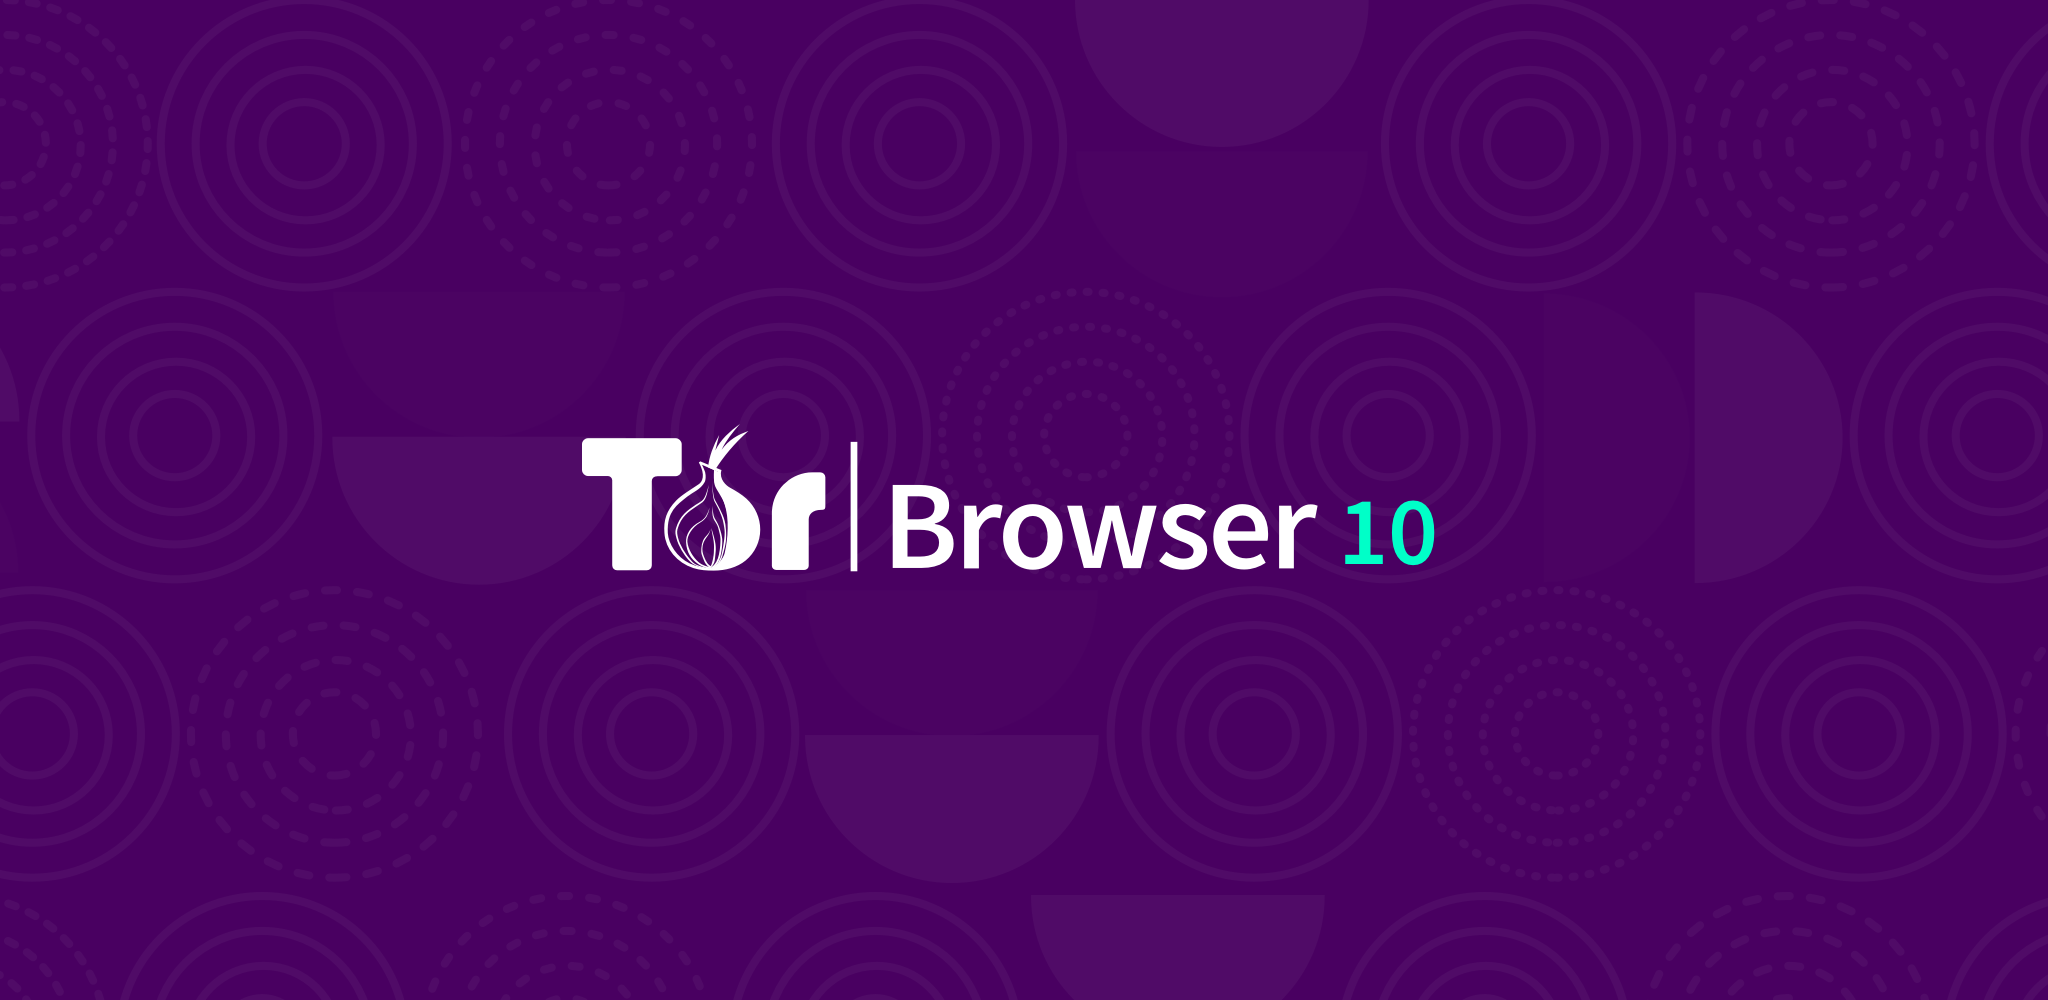 tor browser easy download